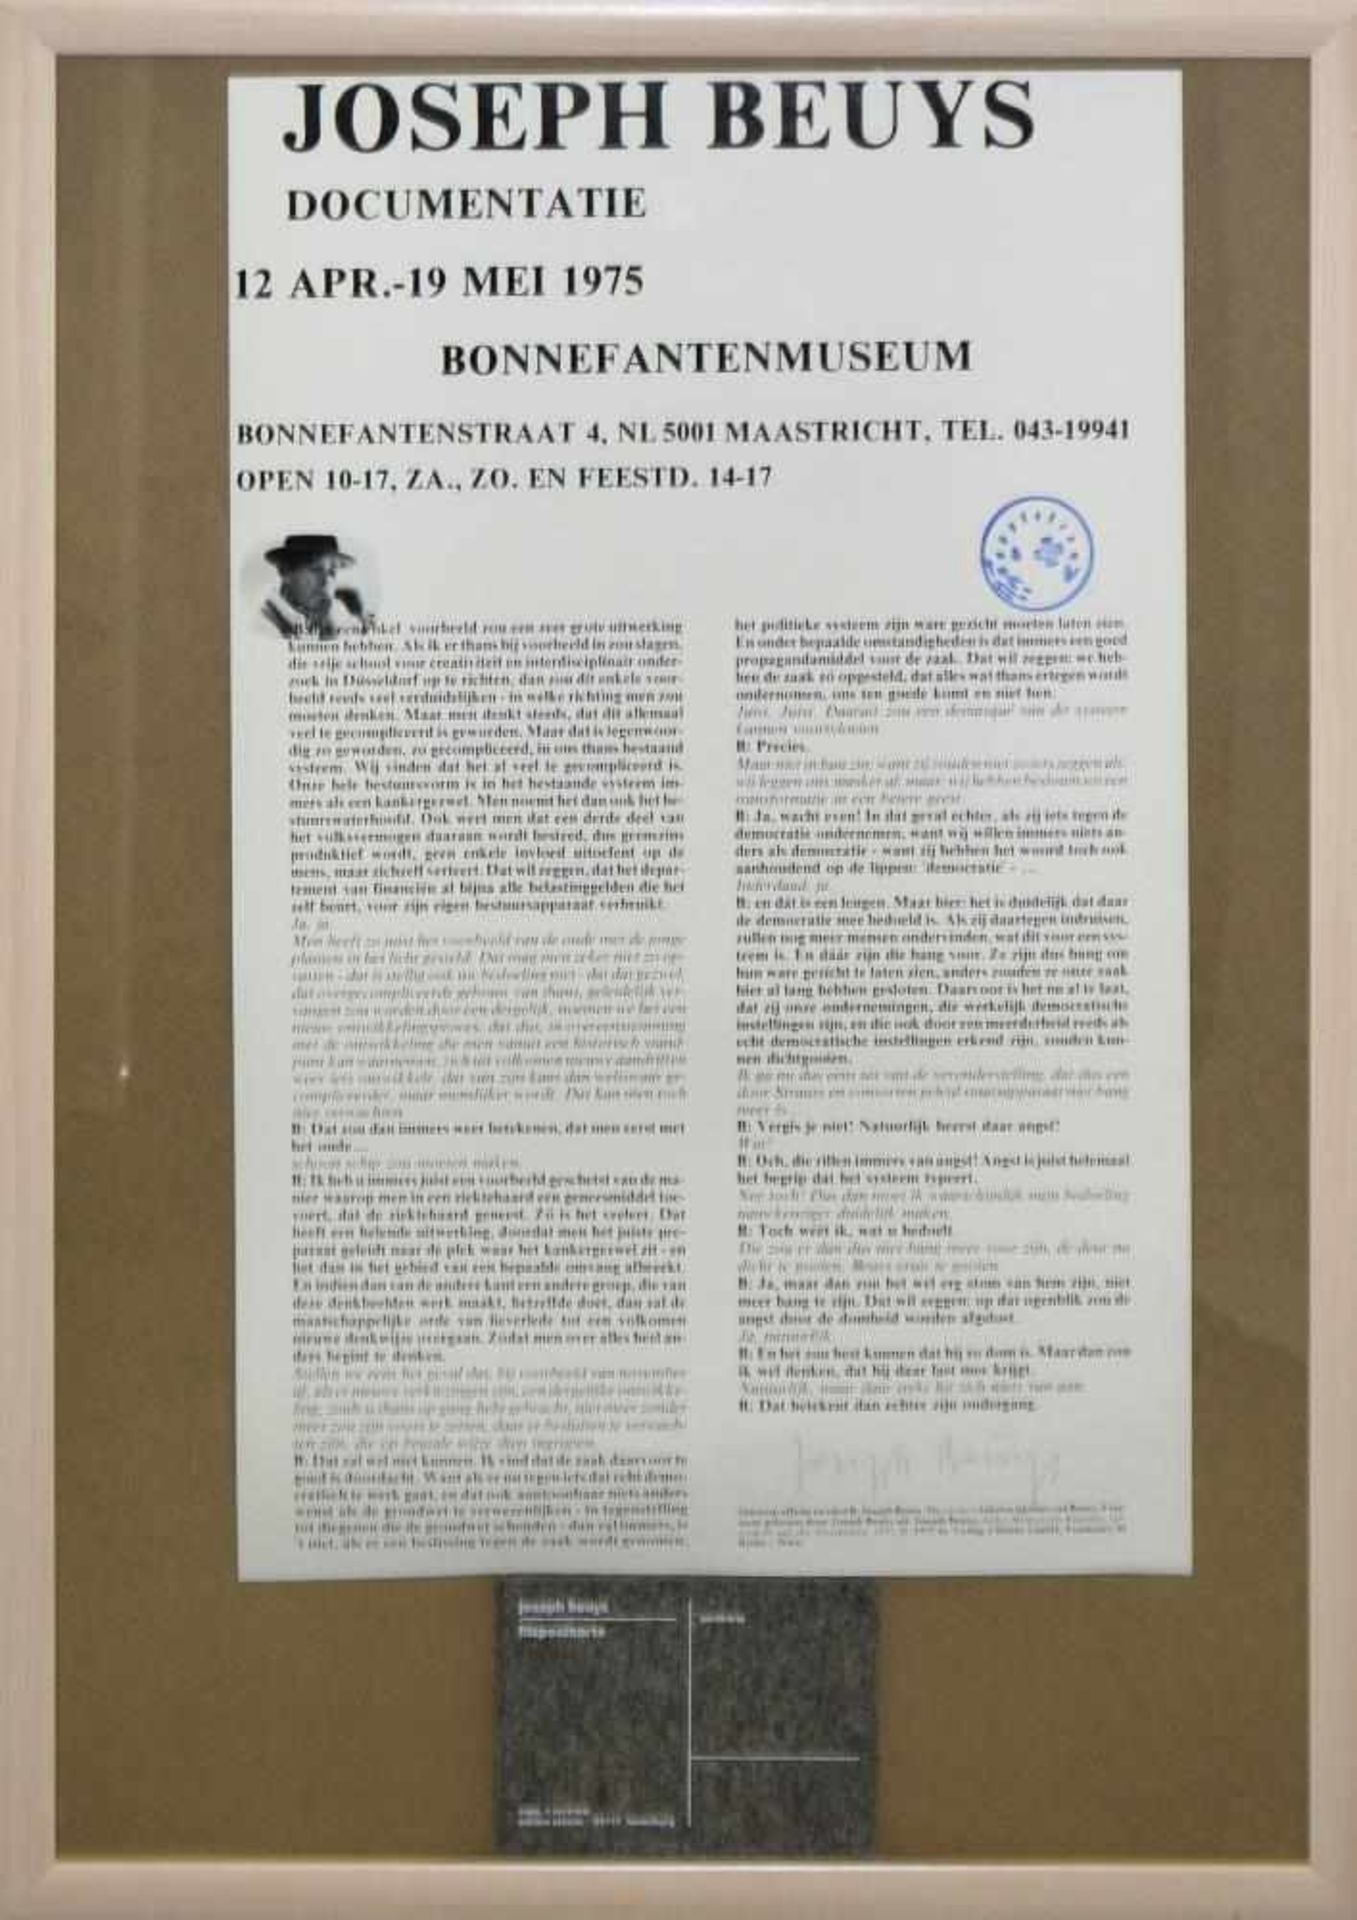 Joseph Beuys, „Documentatie”, signierte Farboffsetlitographie von 1975 & Filzpostkarte o. Rahmen